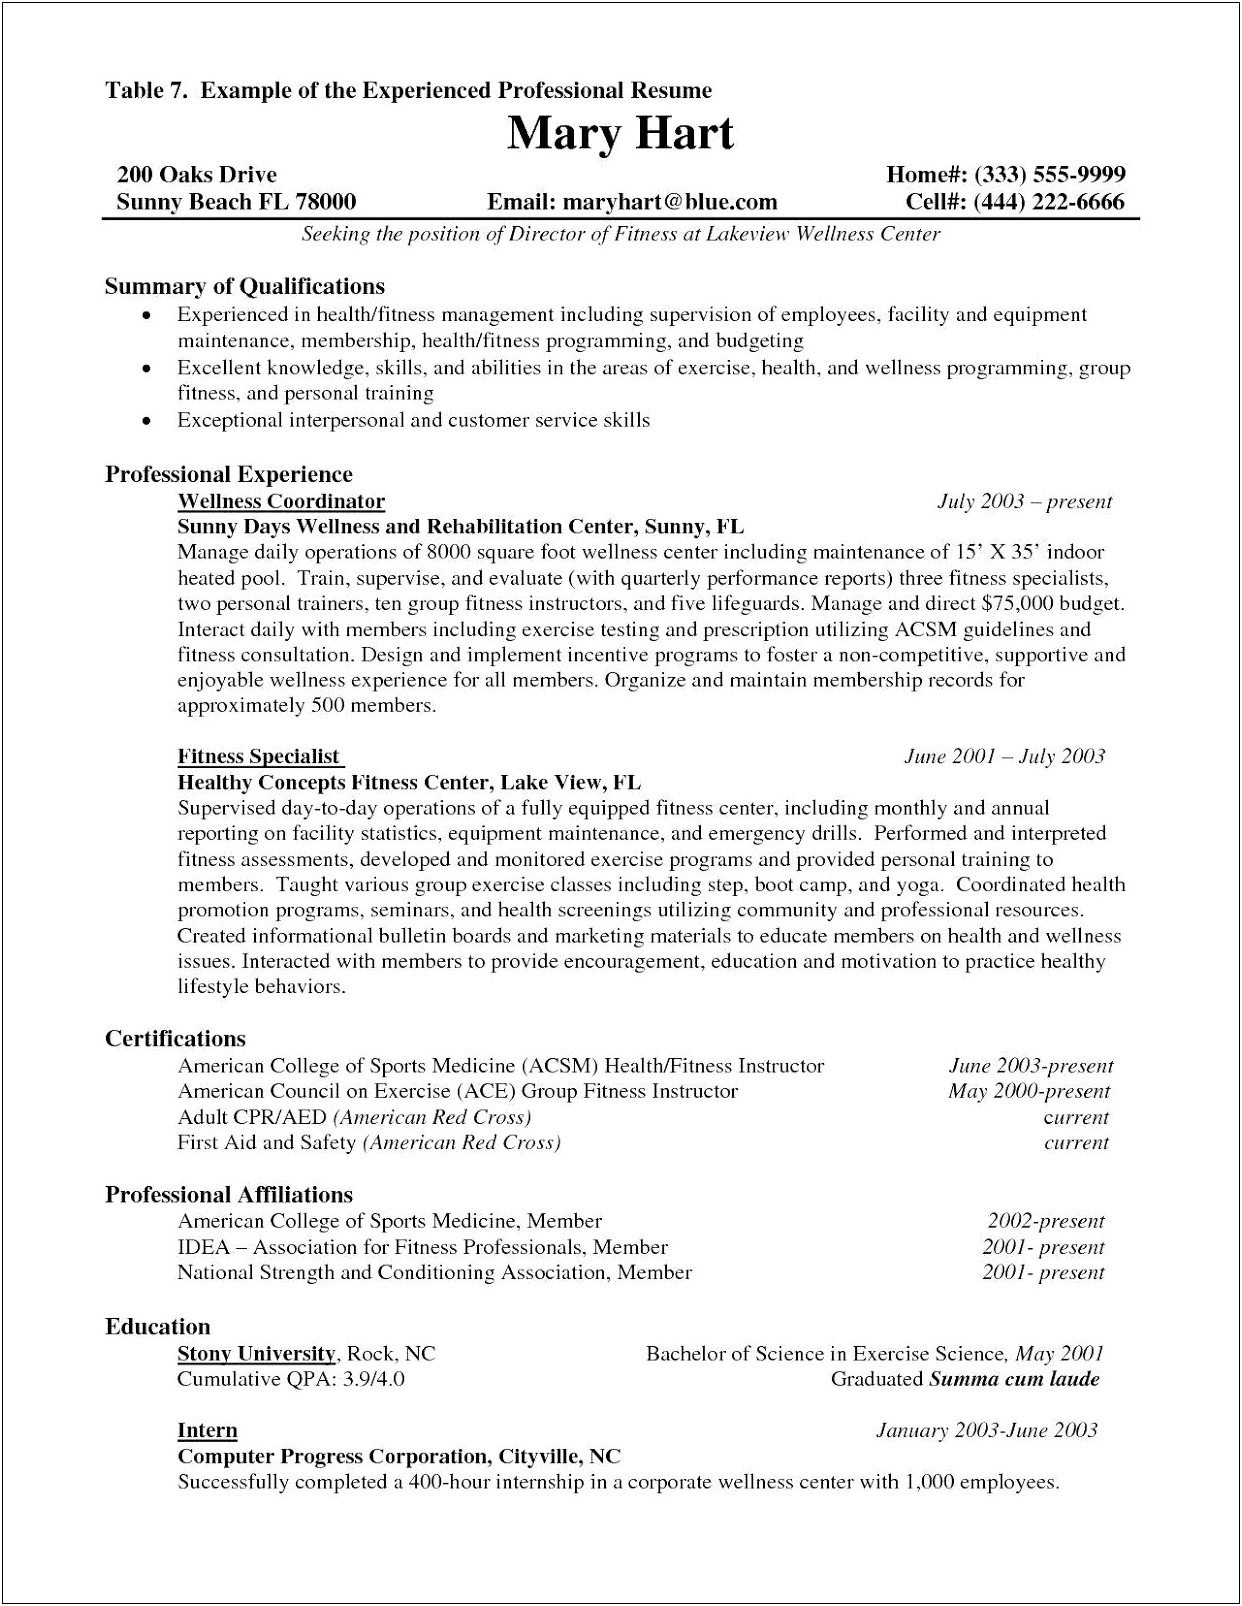 Haravad Business School Resume Format.doc